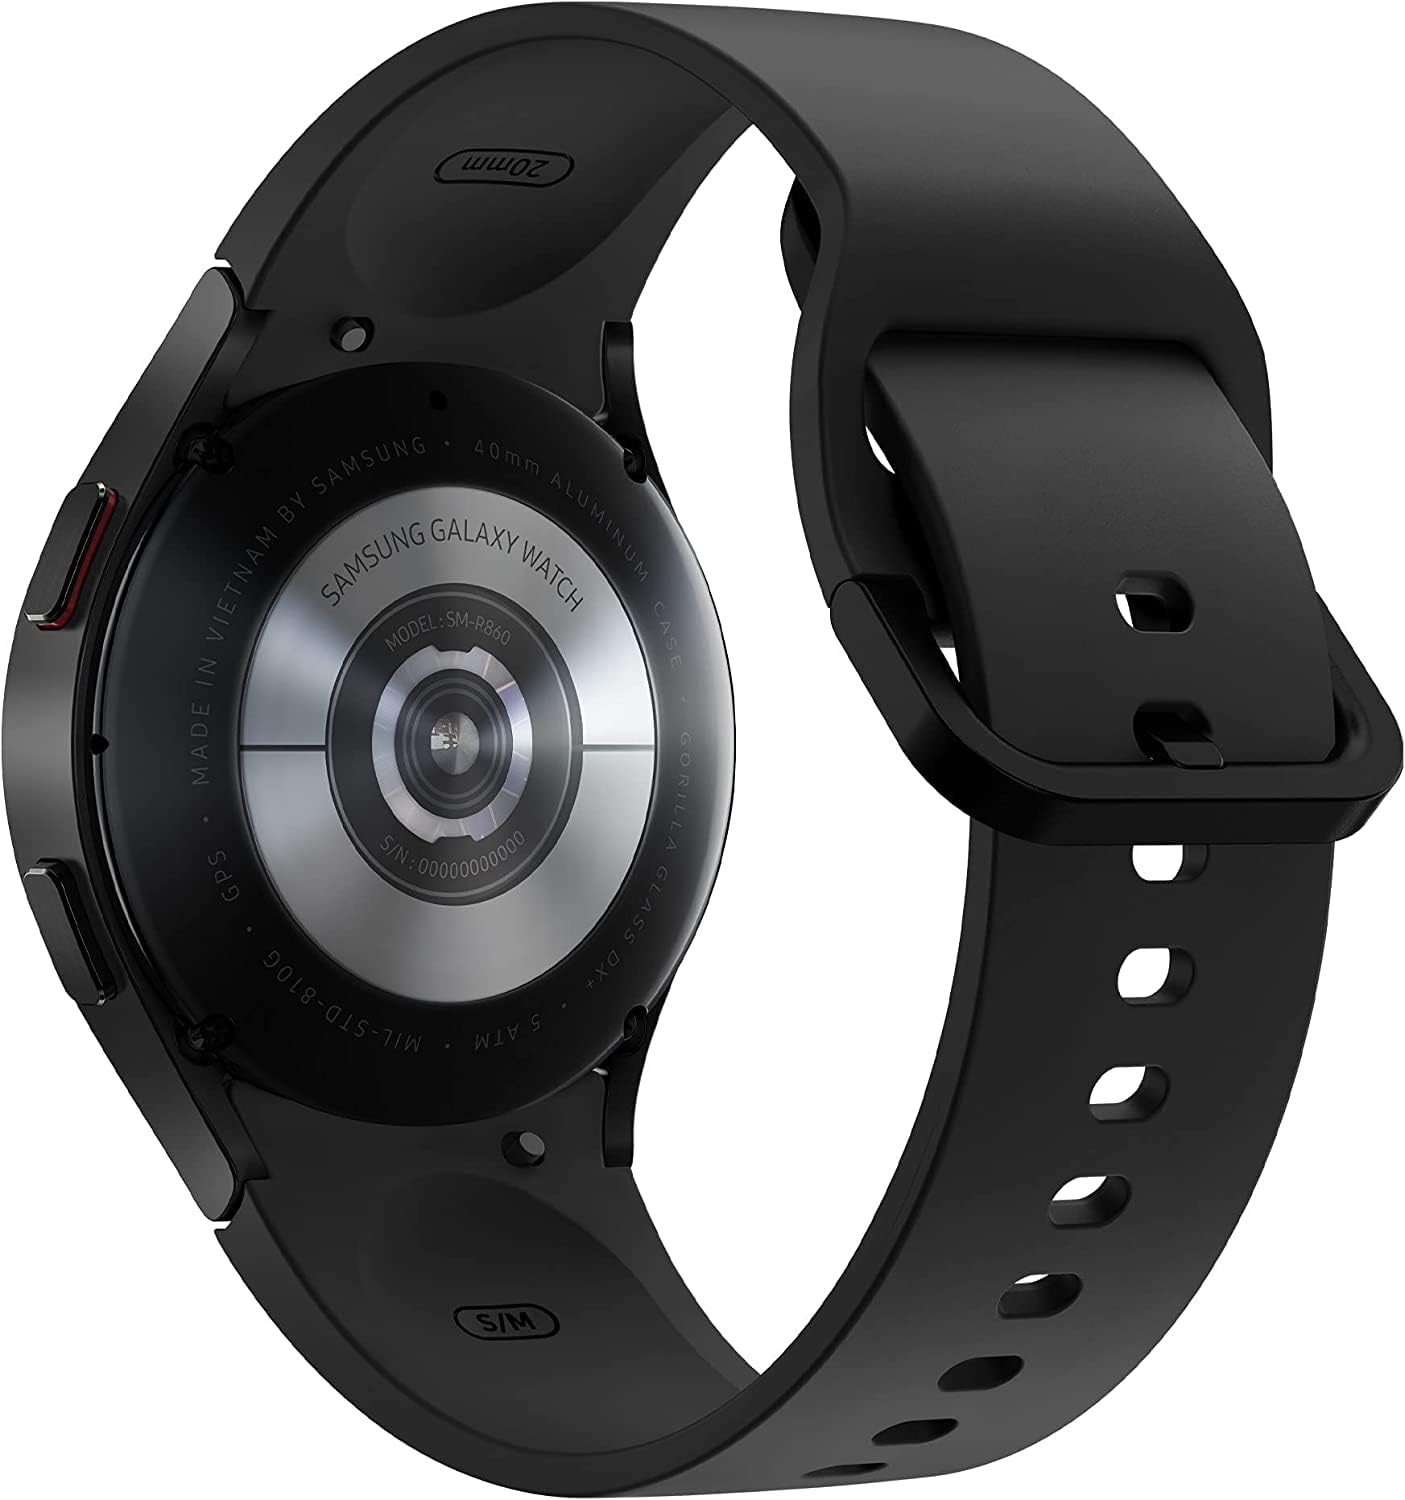 Samsung Galaxy Watch4 Smart Watch, Health Monitoring, Fitness Tracker, Long Lasting Battery, 4G, 40mm, Black (UK Version) (Renewed)